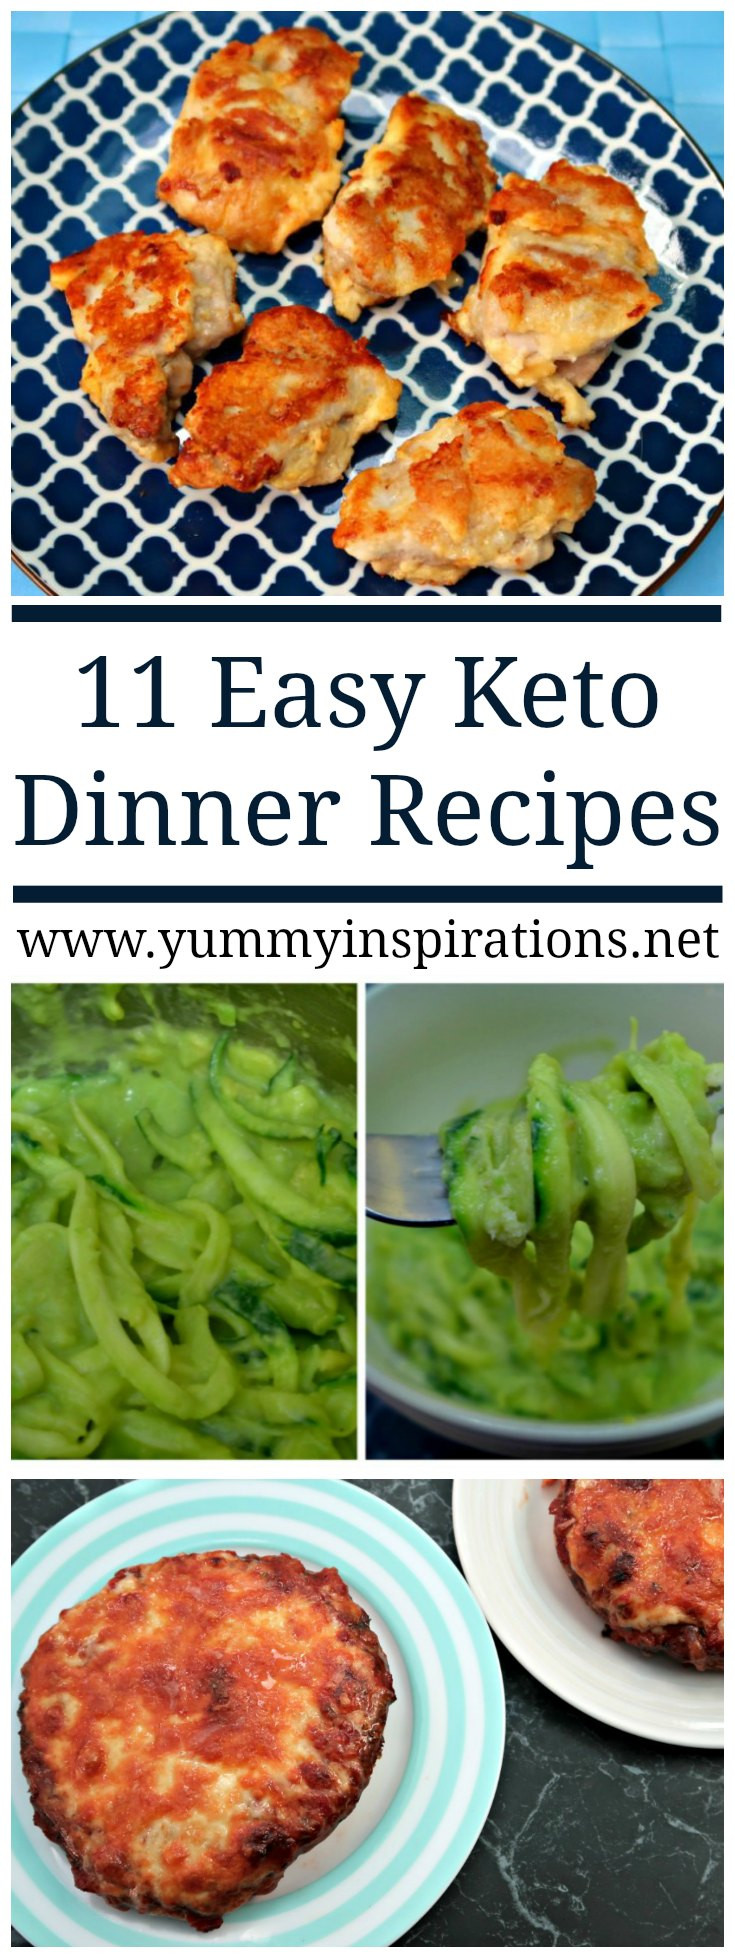 Low Carb Keto Recipes Dinner
 11 Easy Keto Dinner Recipes Quick Low Carb Ketogenic